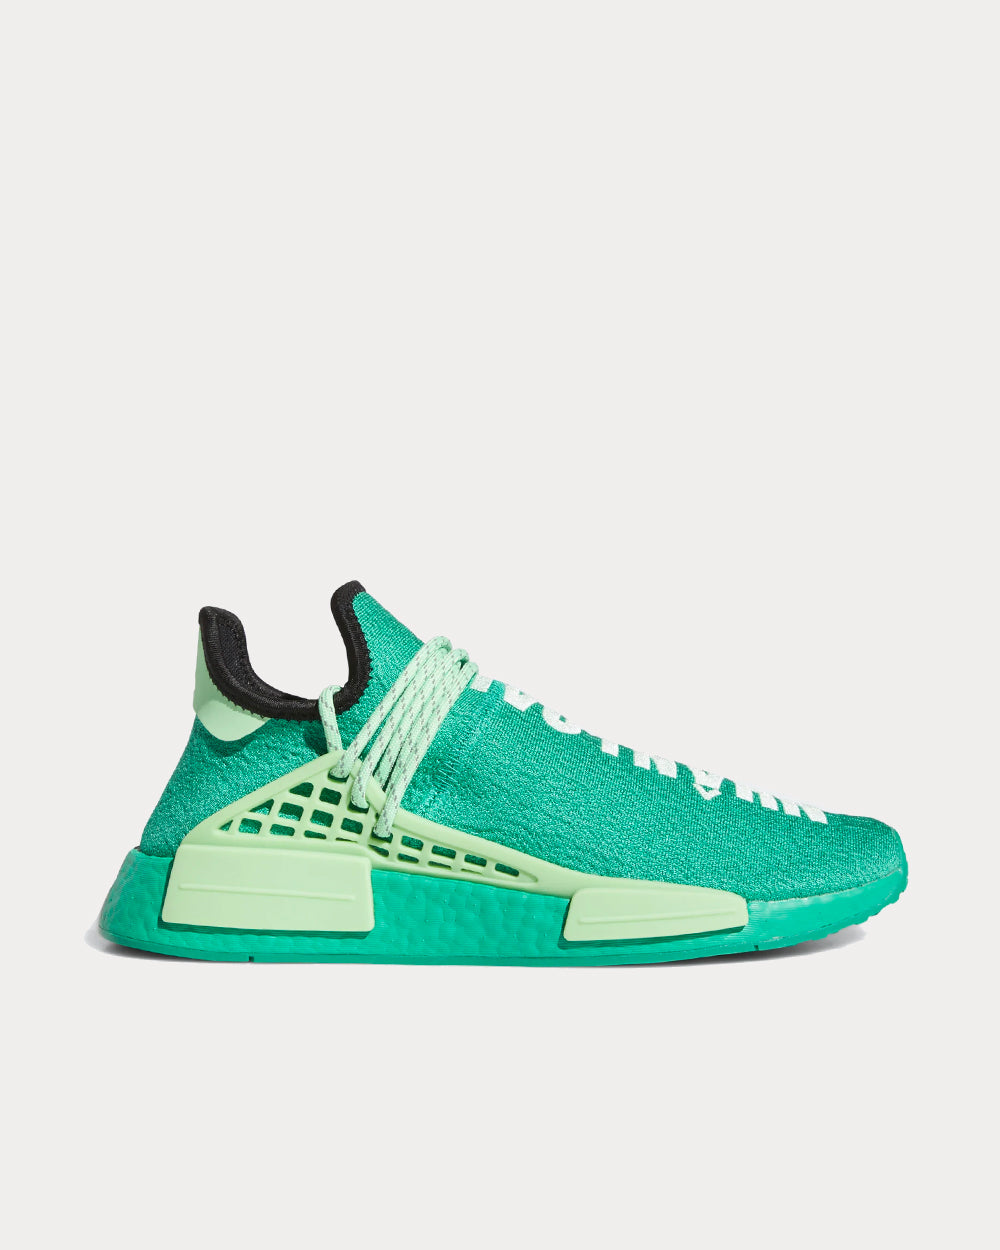 Adidas x Pharrell Williams - HU NMD Core Green Low Top Sneakers